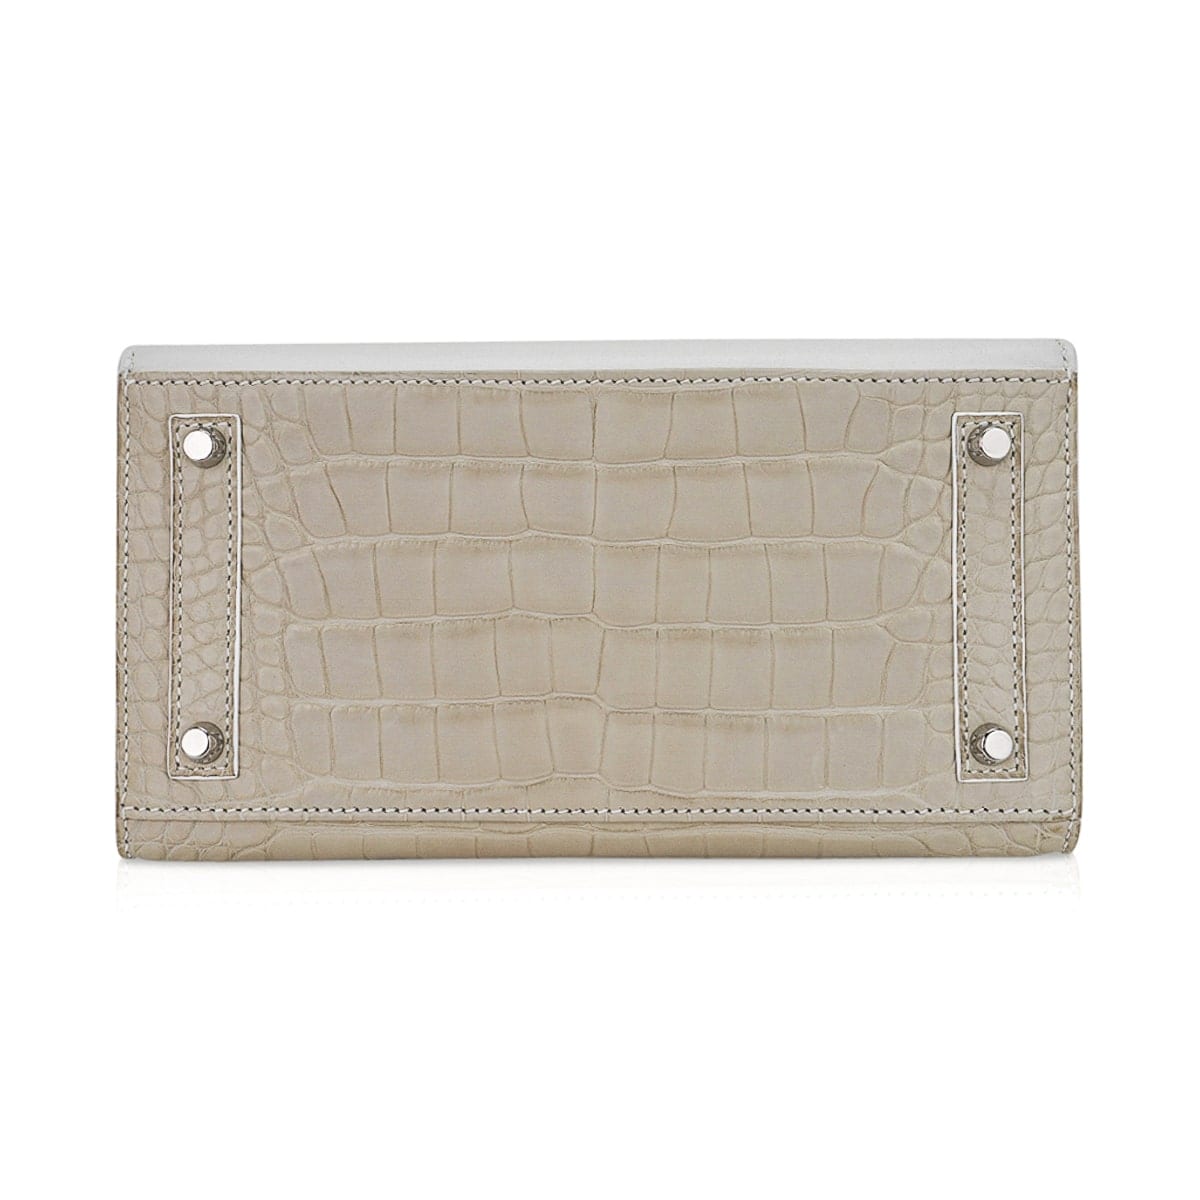 Hermes Limited Edition Birkin 20 Faubourg Sellier Bag Neige (Snow) White Matte Alligator